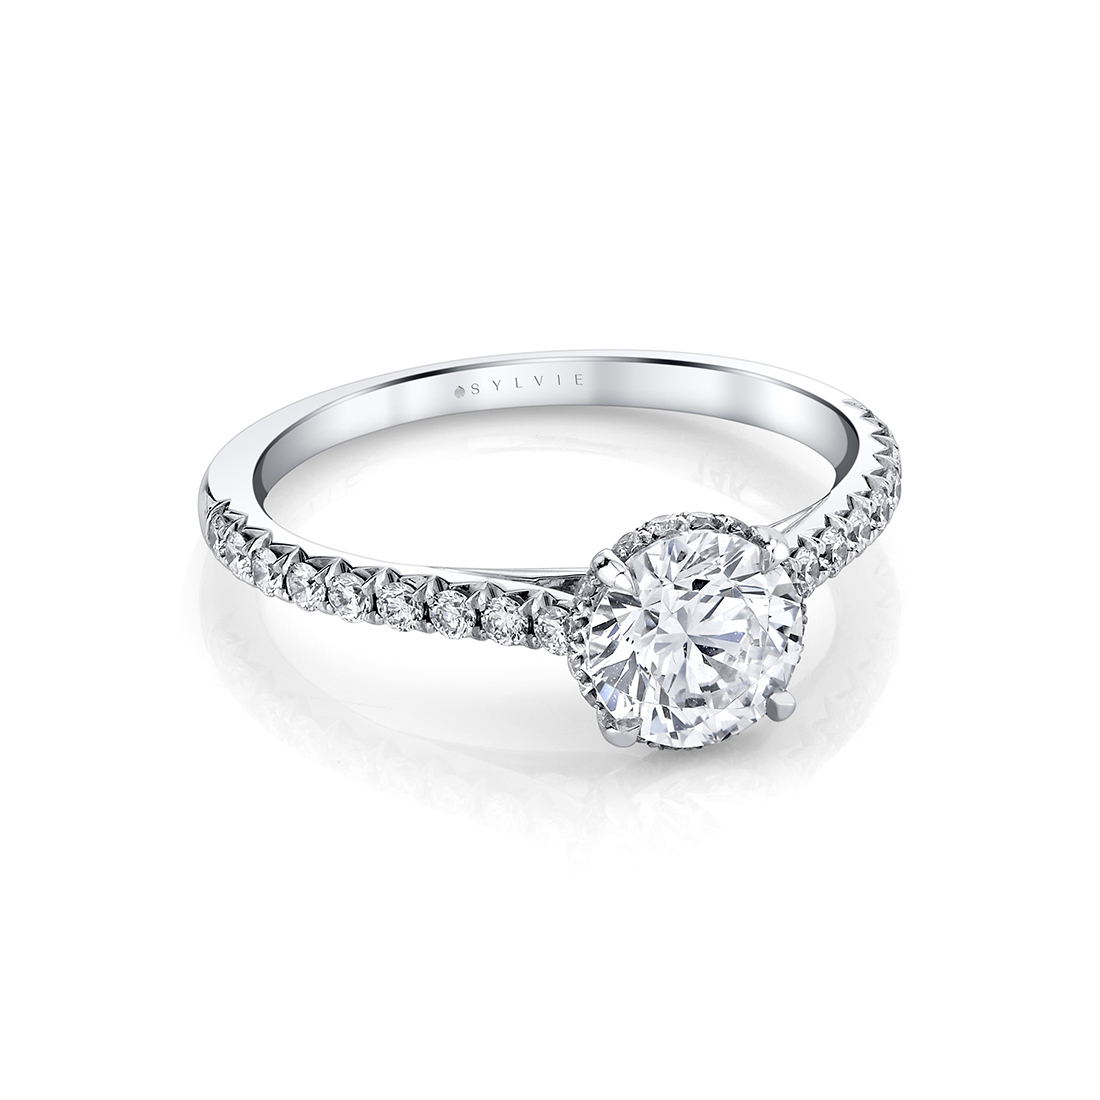 Round Cut Classic Hidden Halo Engagement Ring - Harmonie - Sylvie Jewelry